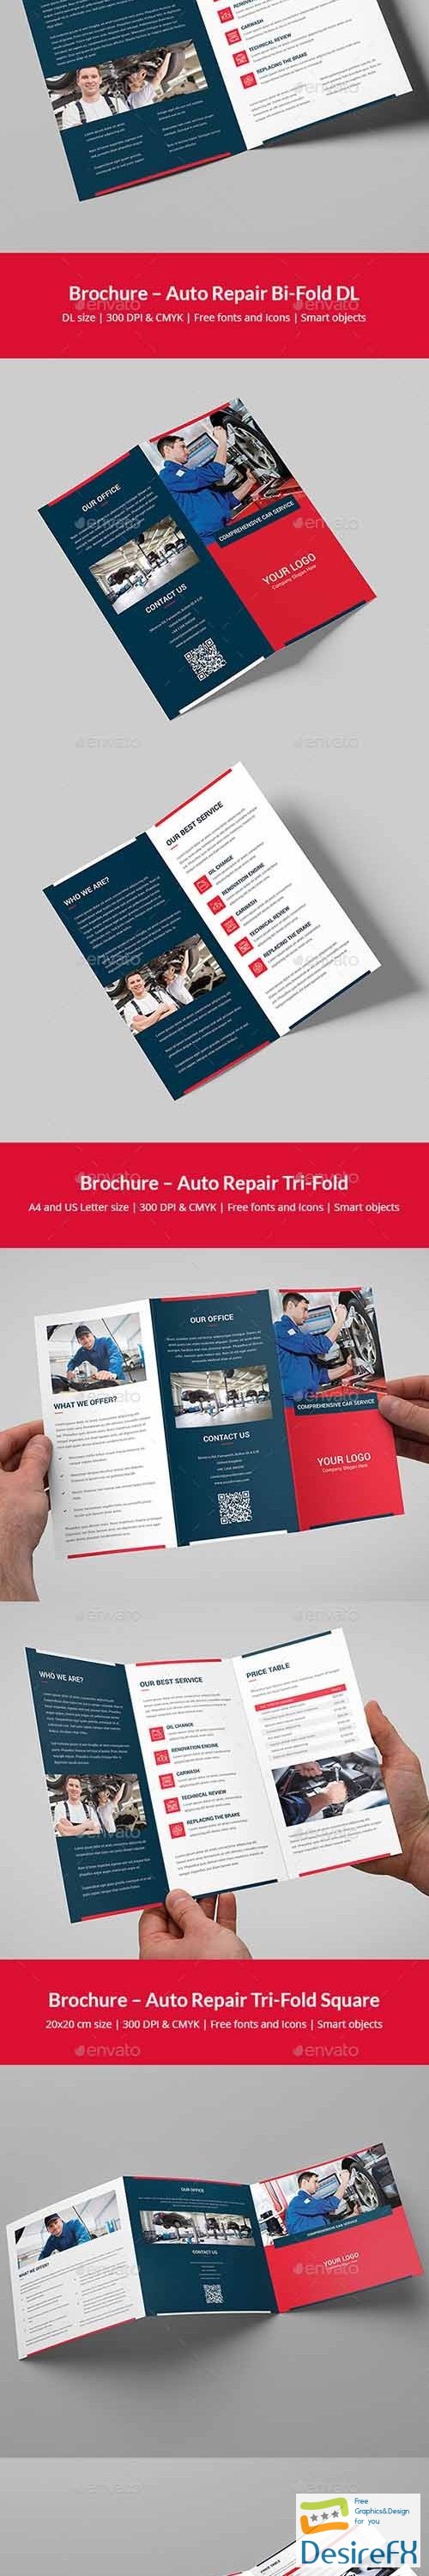 Auto Repair – Bundle Print Templates 5 in 1 21294221